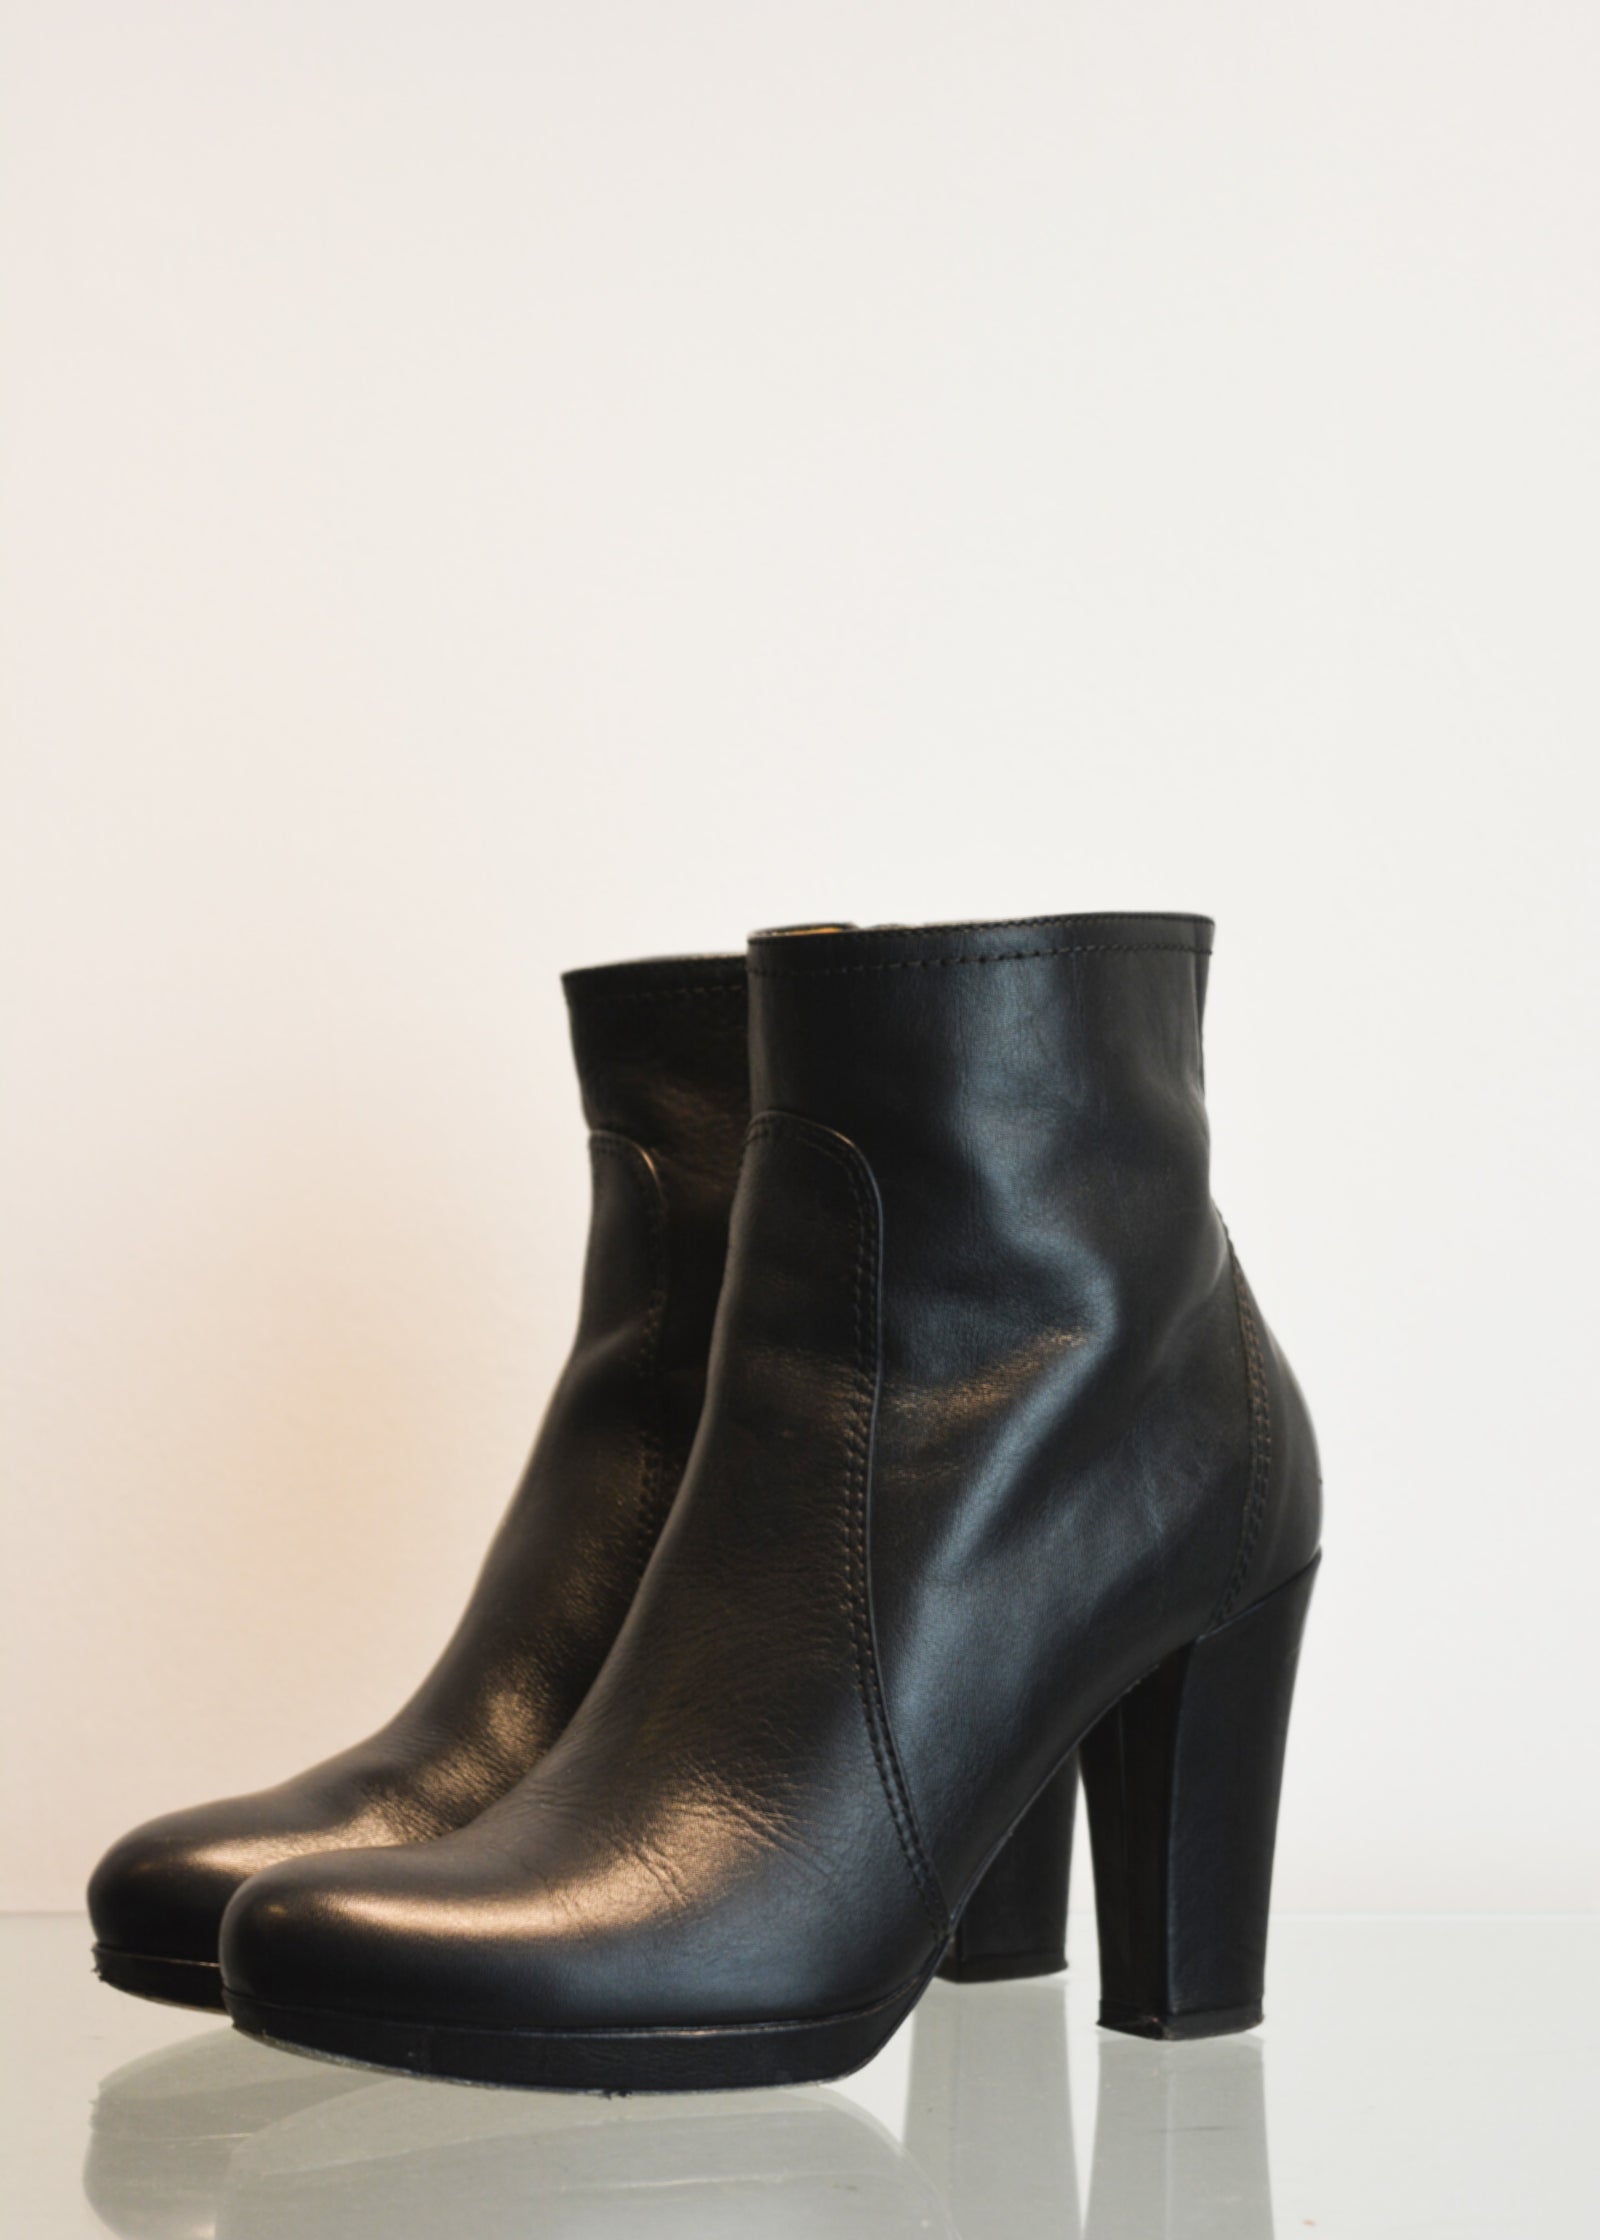 PREWORN | Preloved - 'HOBBS' Ankle Boot - Size 5 UK